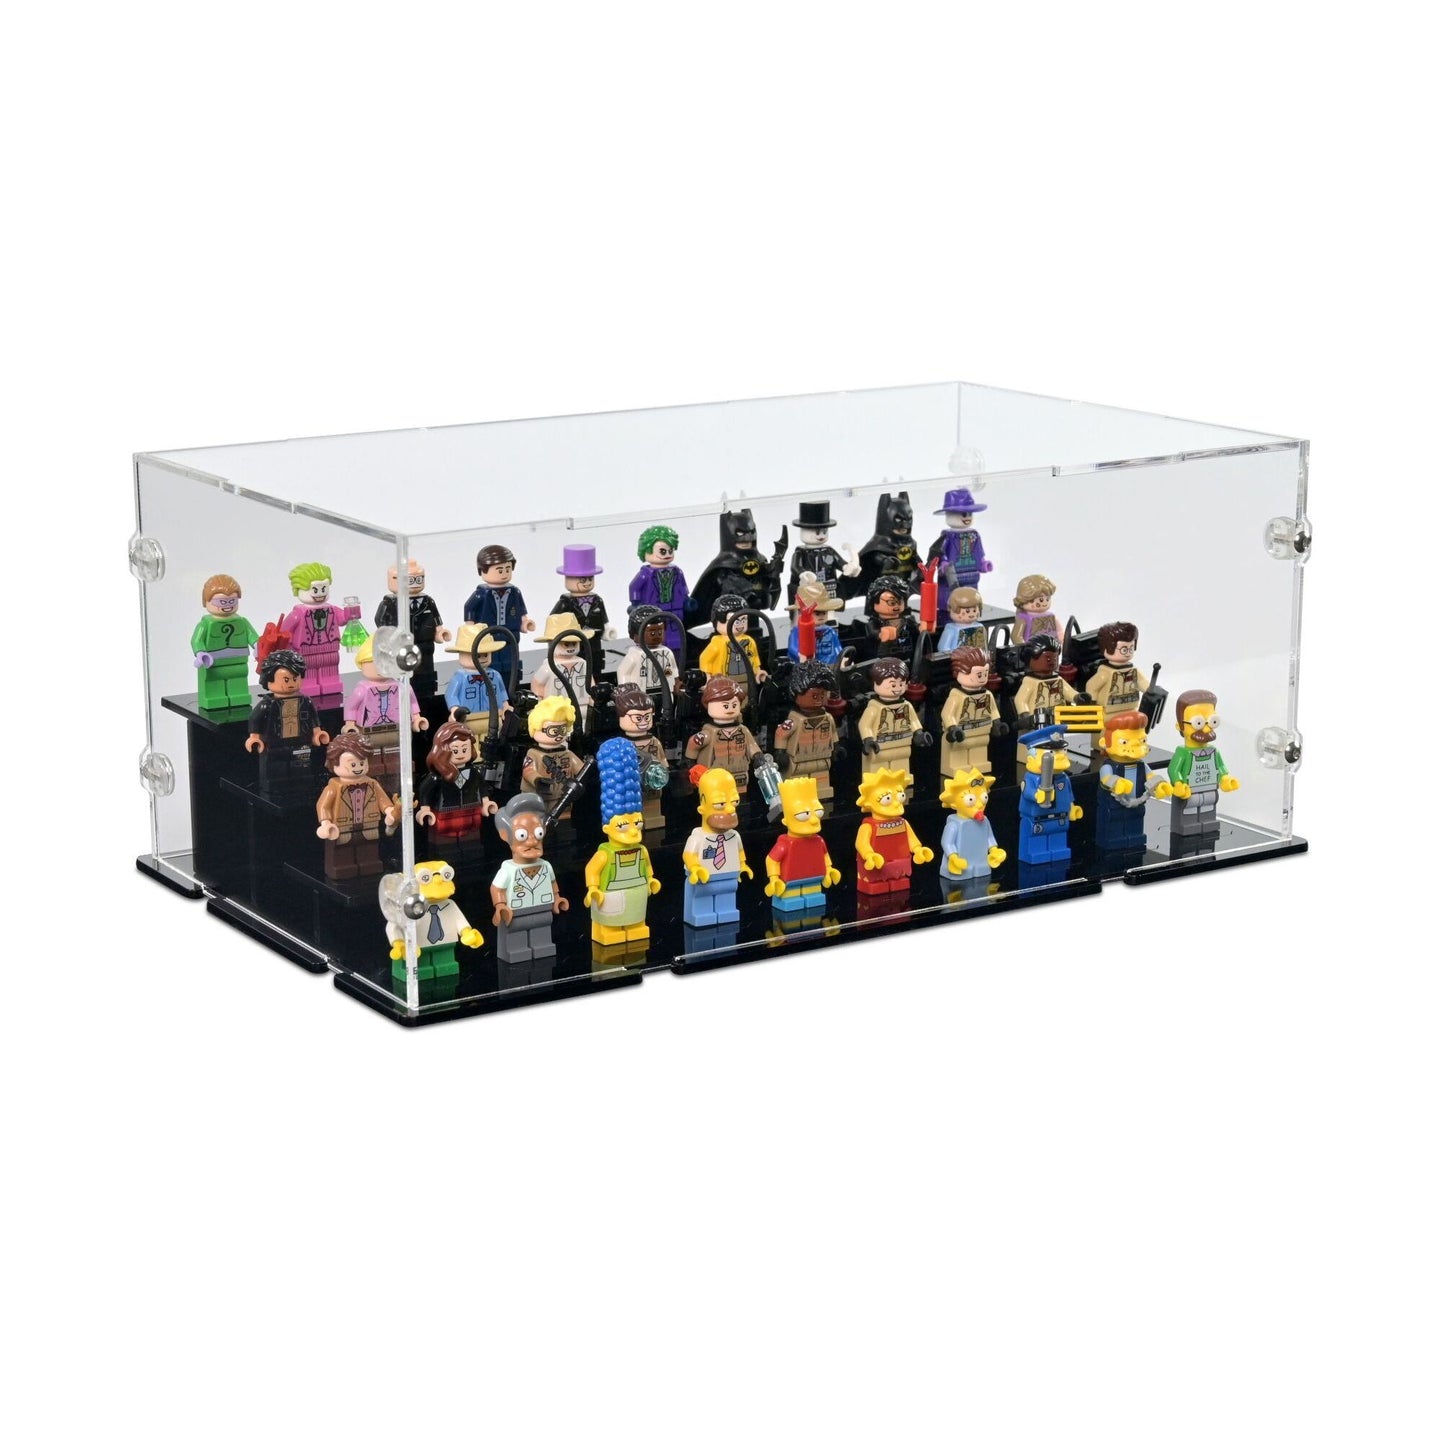 40 LEGO® Minifigures Display Case